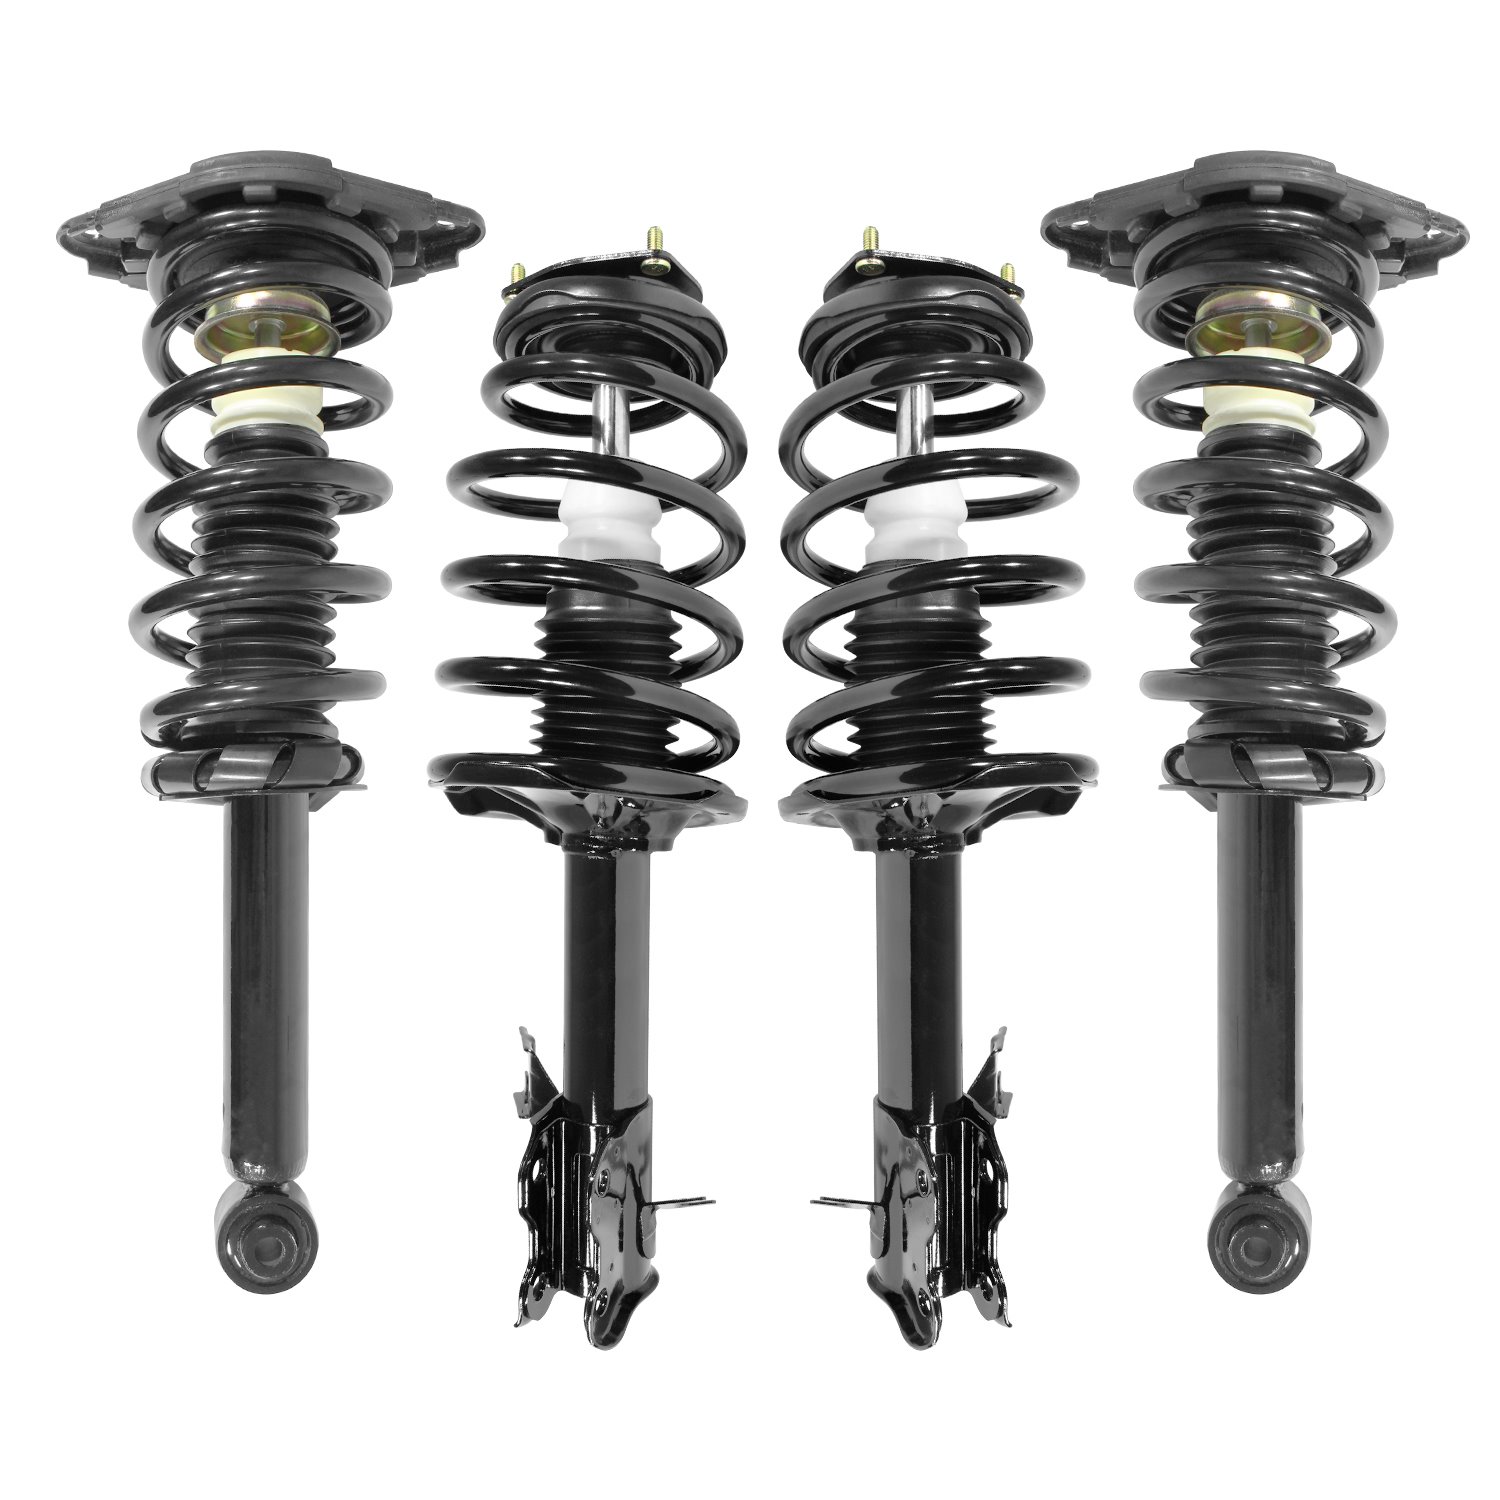 4-11571-15350-001 Front & Rear Suspension Strut & Coil Spring Assembly Kit Fits Select Nissan Sentra